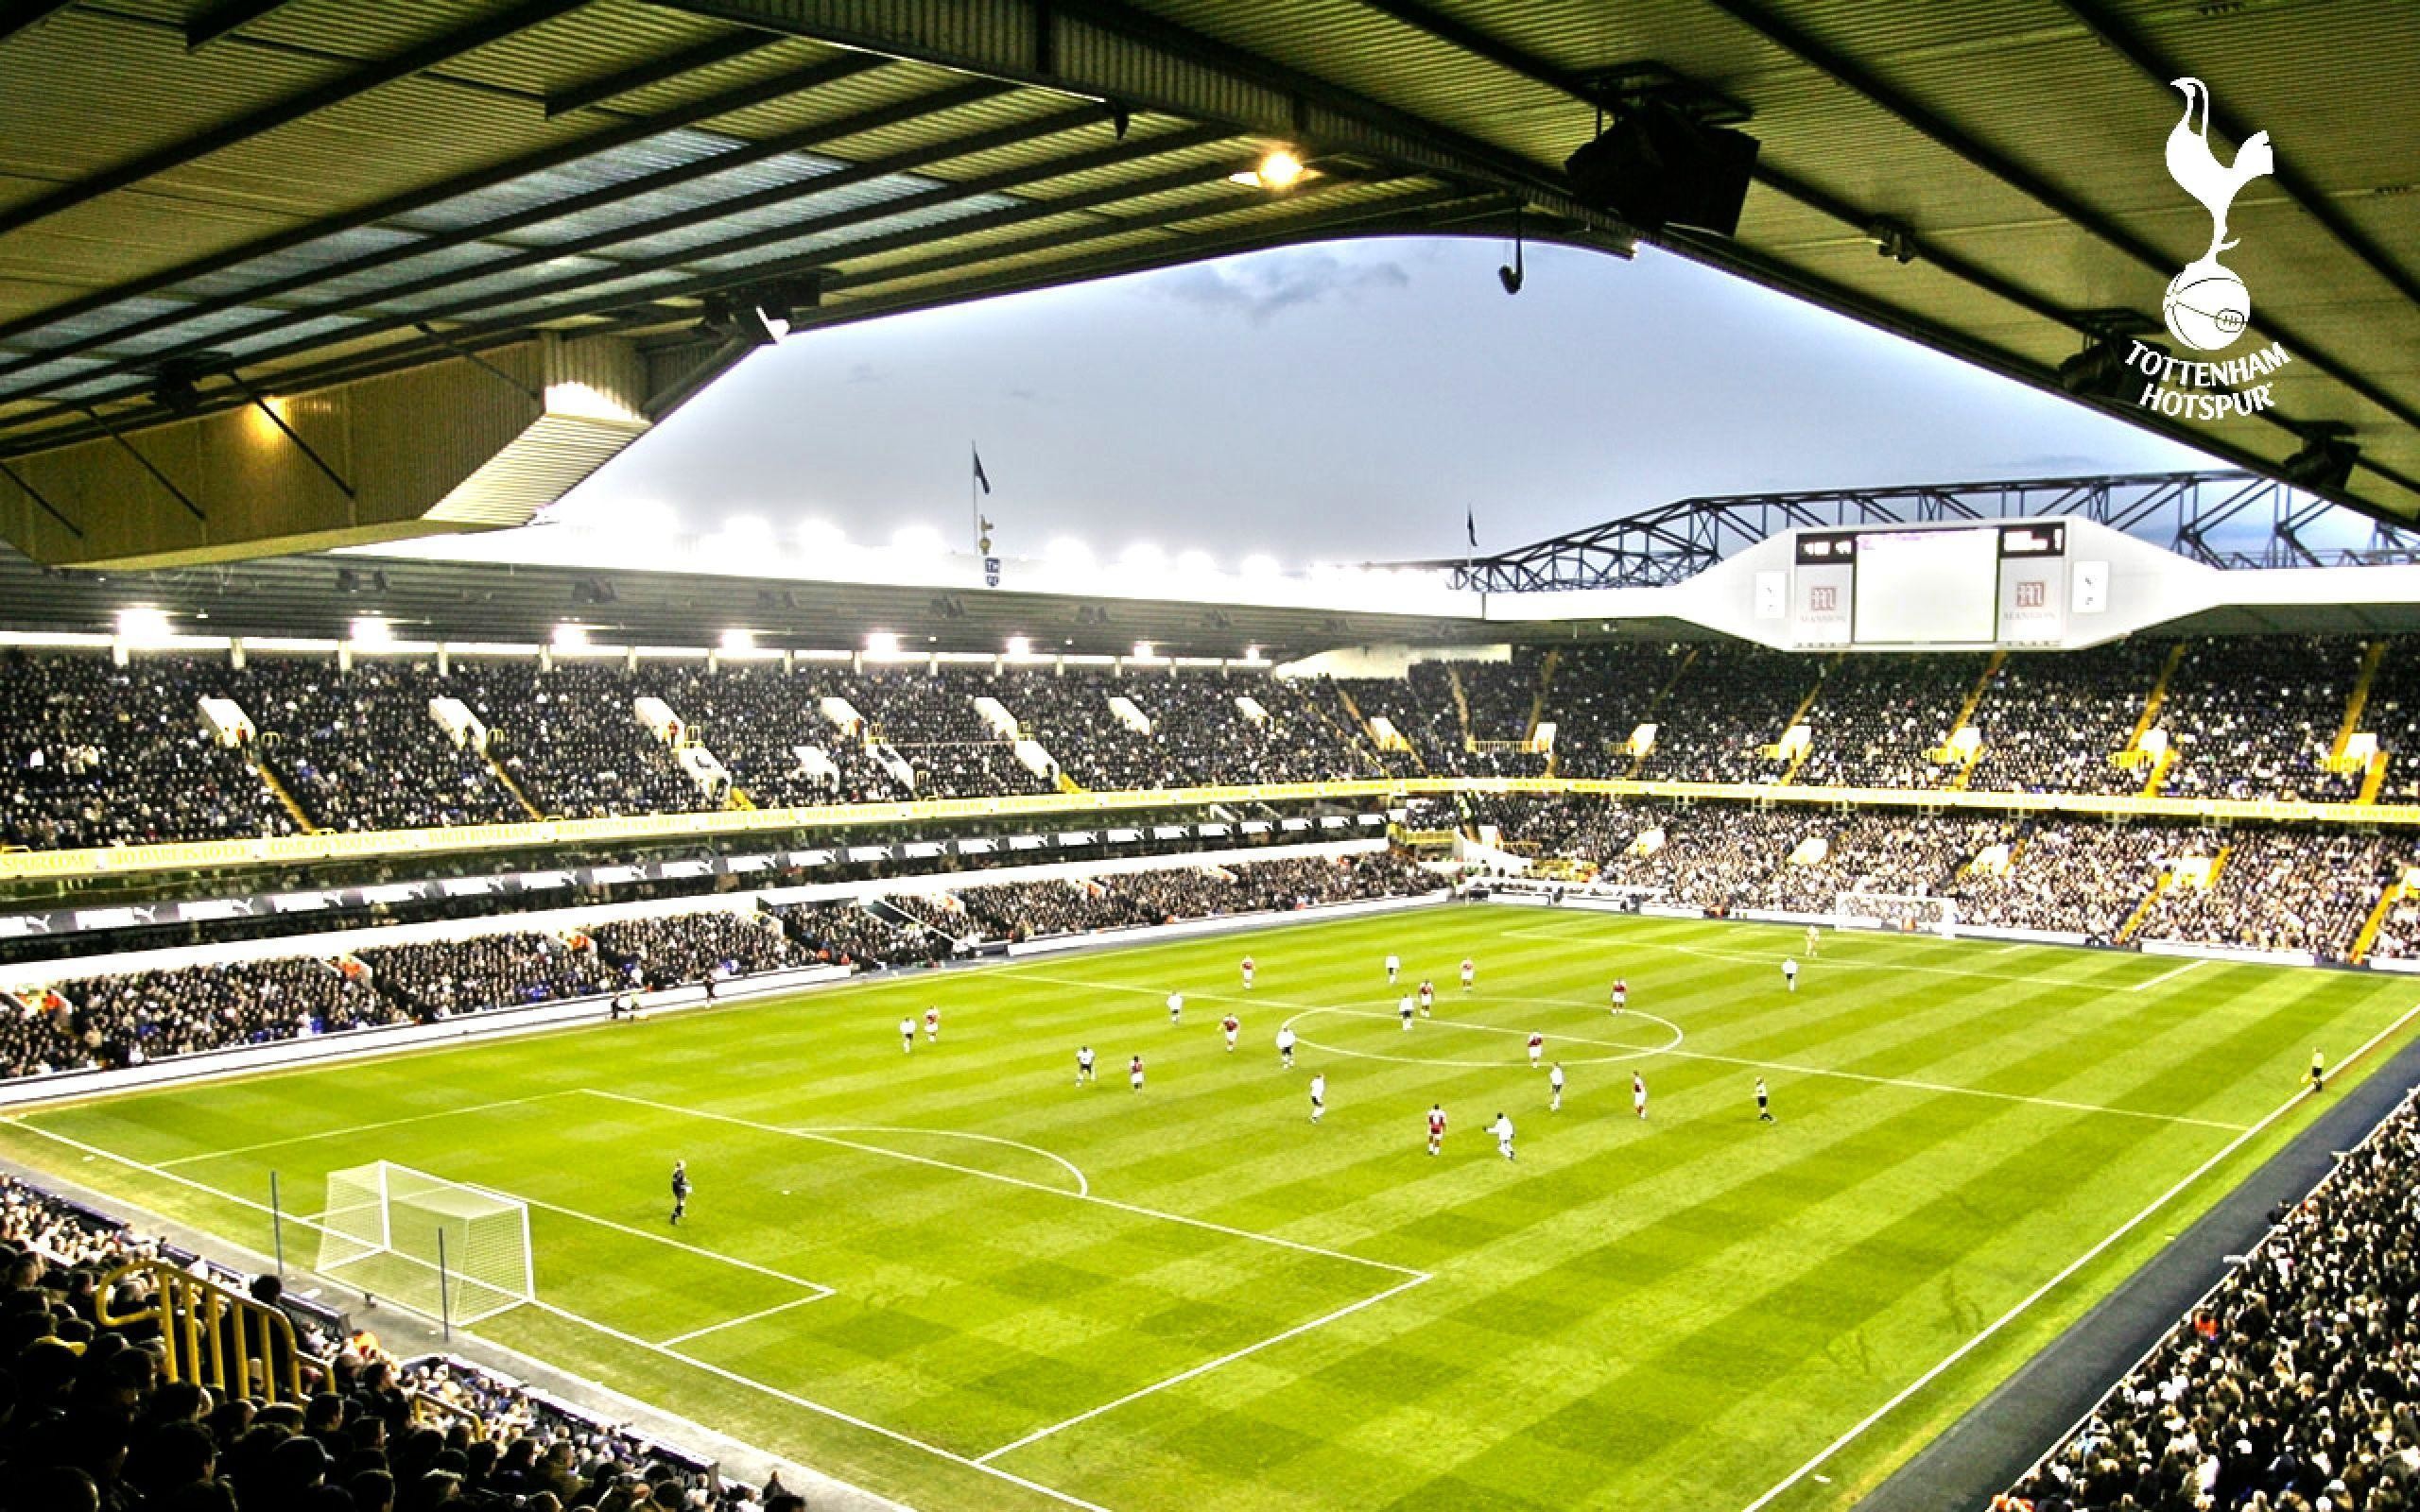 2560x1600 Tottenham Hotspur Wallpaper HD - Soccer Desktop